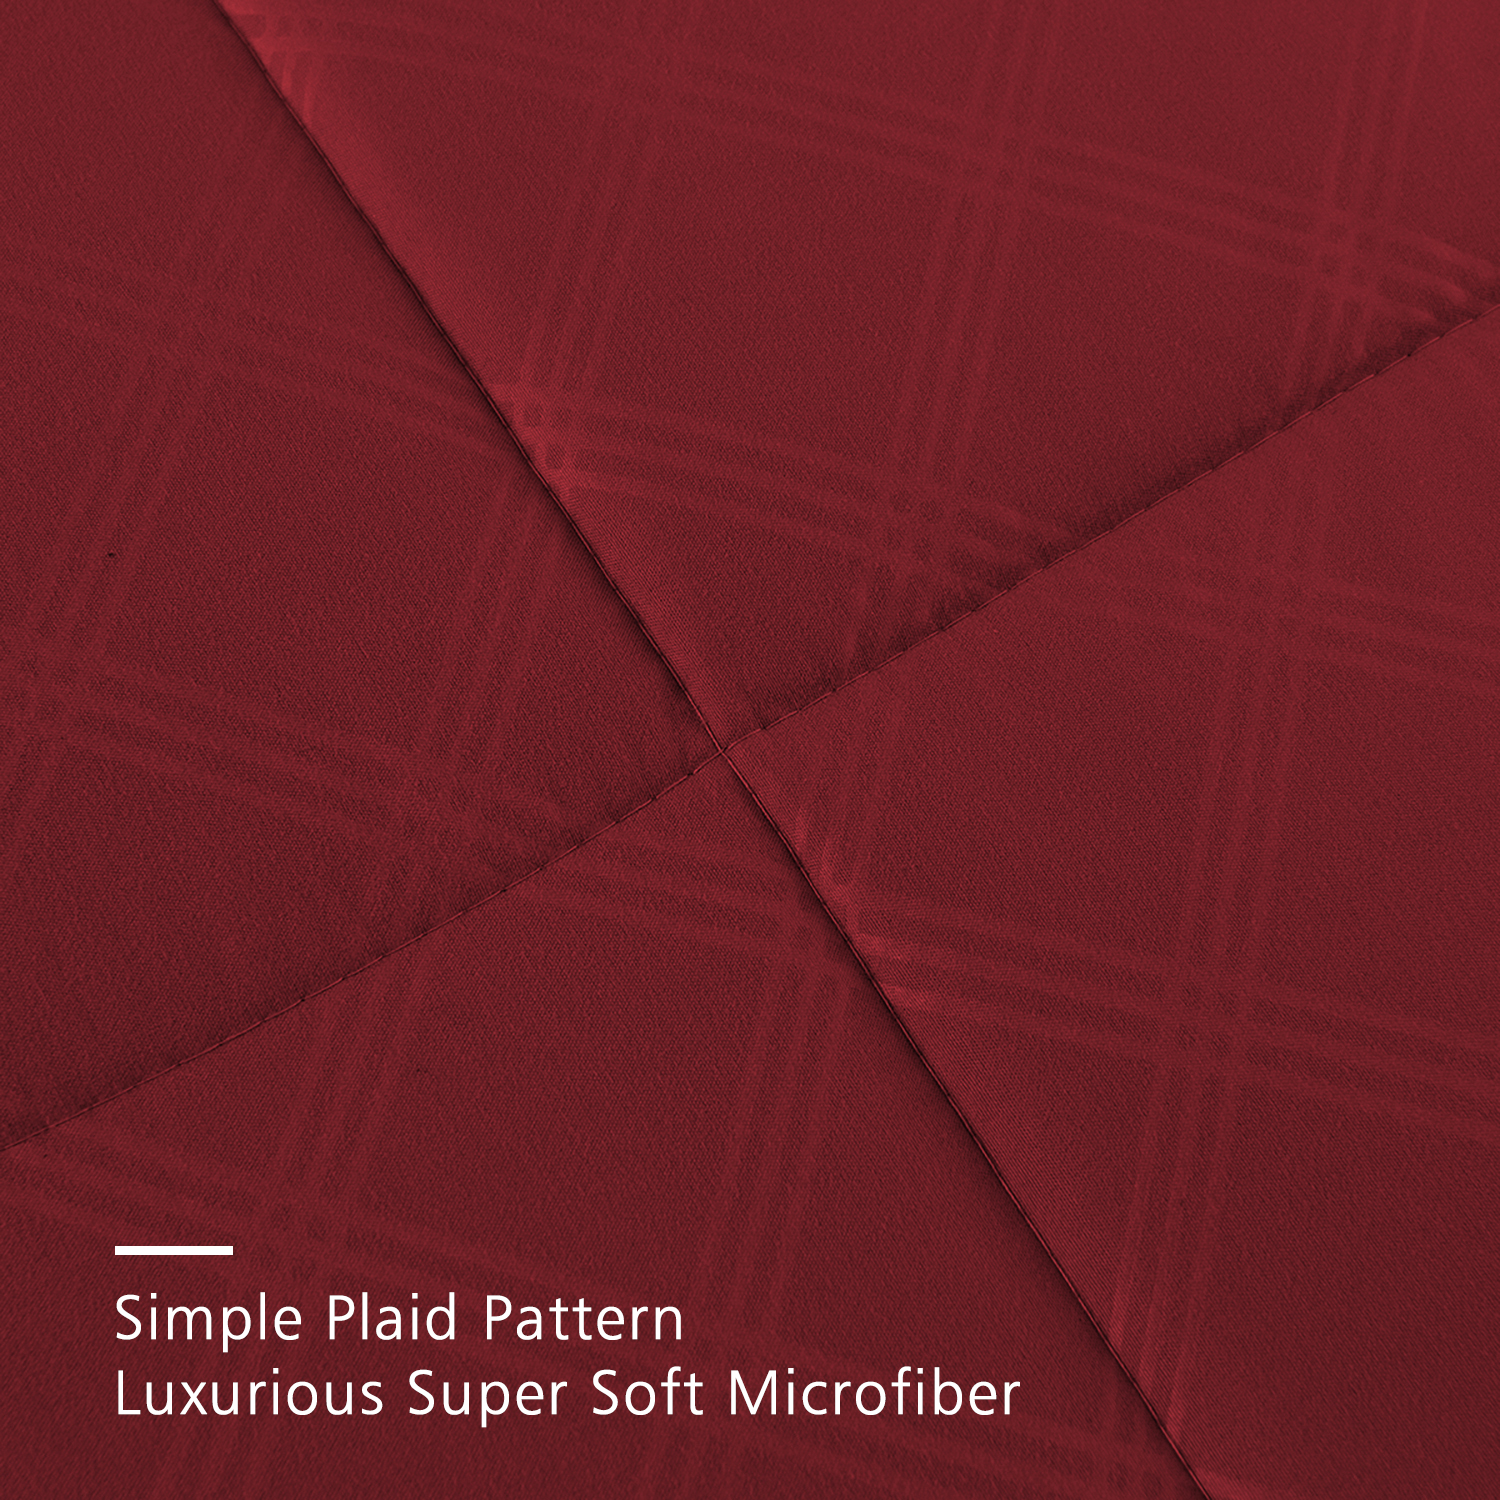 JML 8-10 Pieces Comforter Set,Soft Micorfiber Plaid Pattern Bed In A Bag Bedding Set